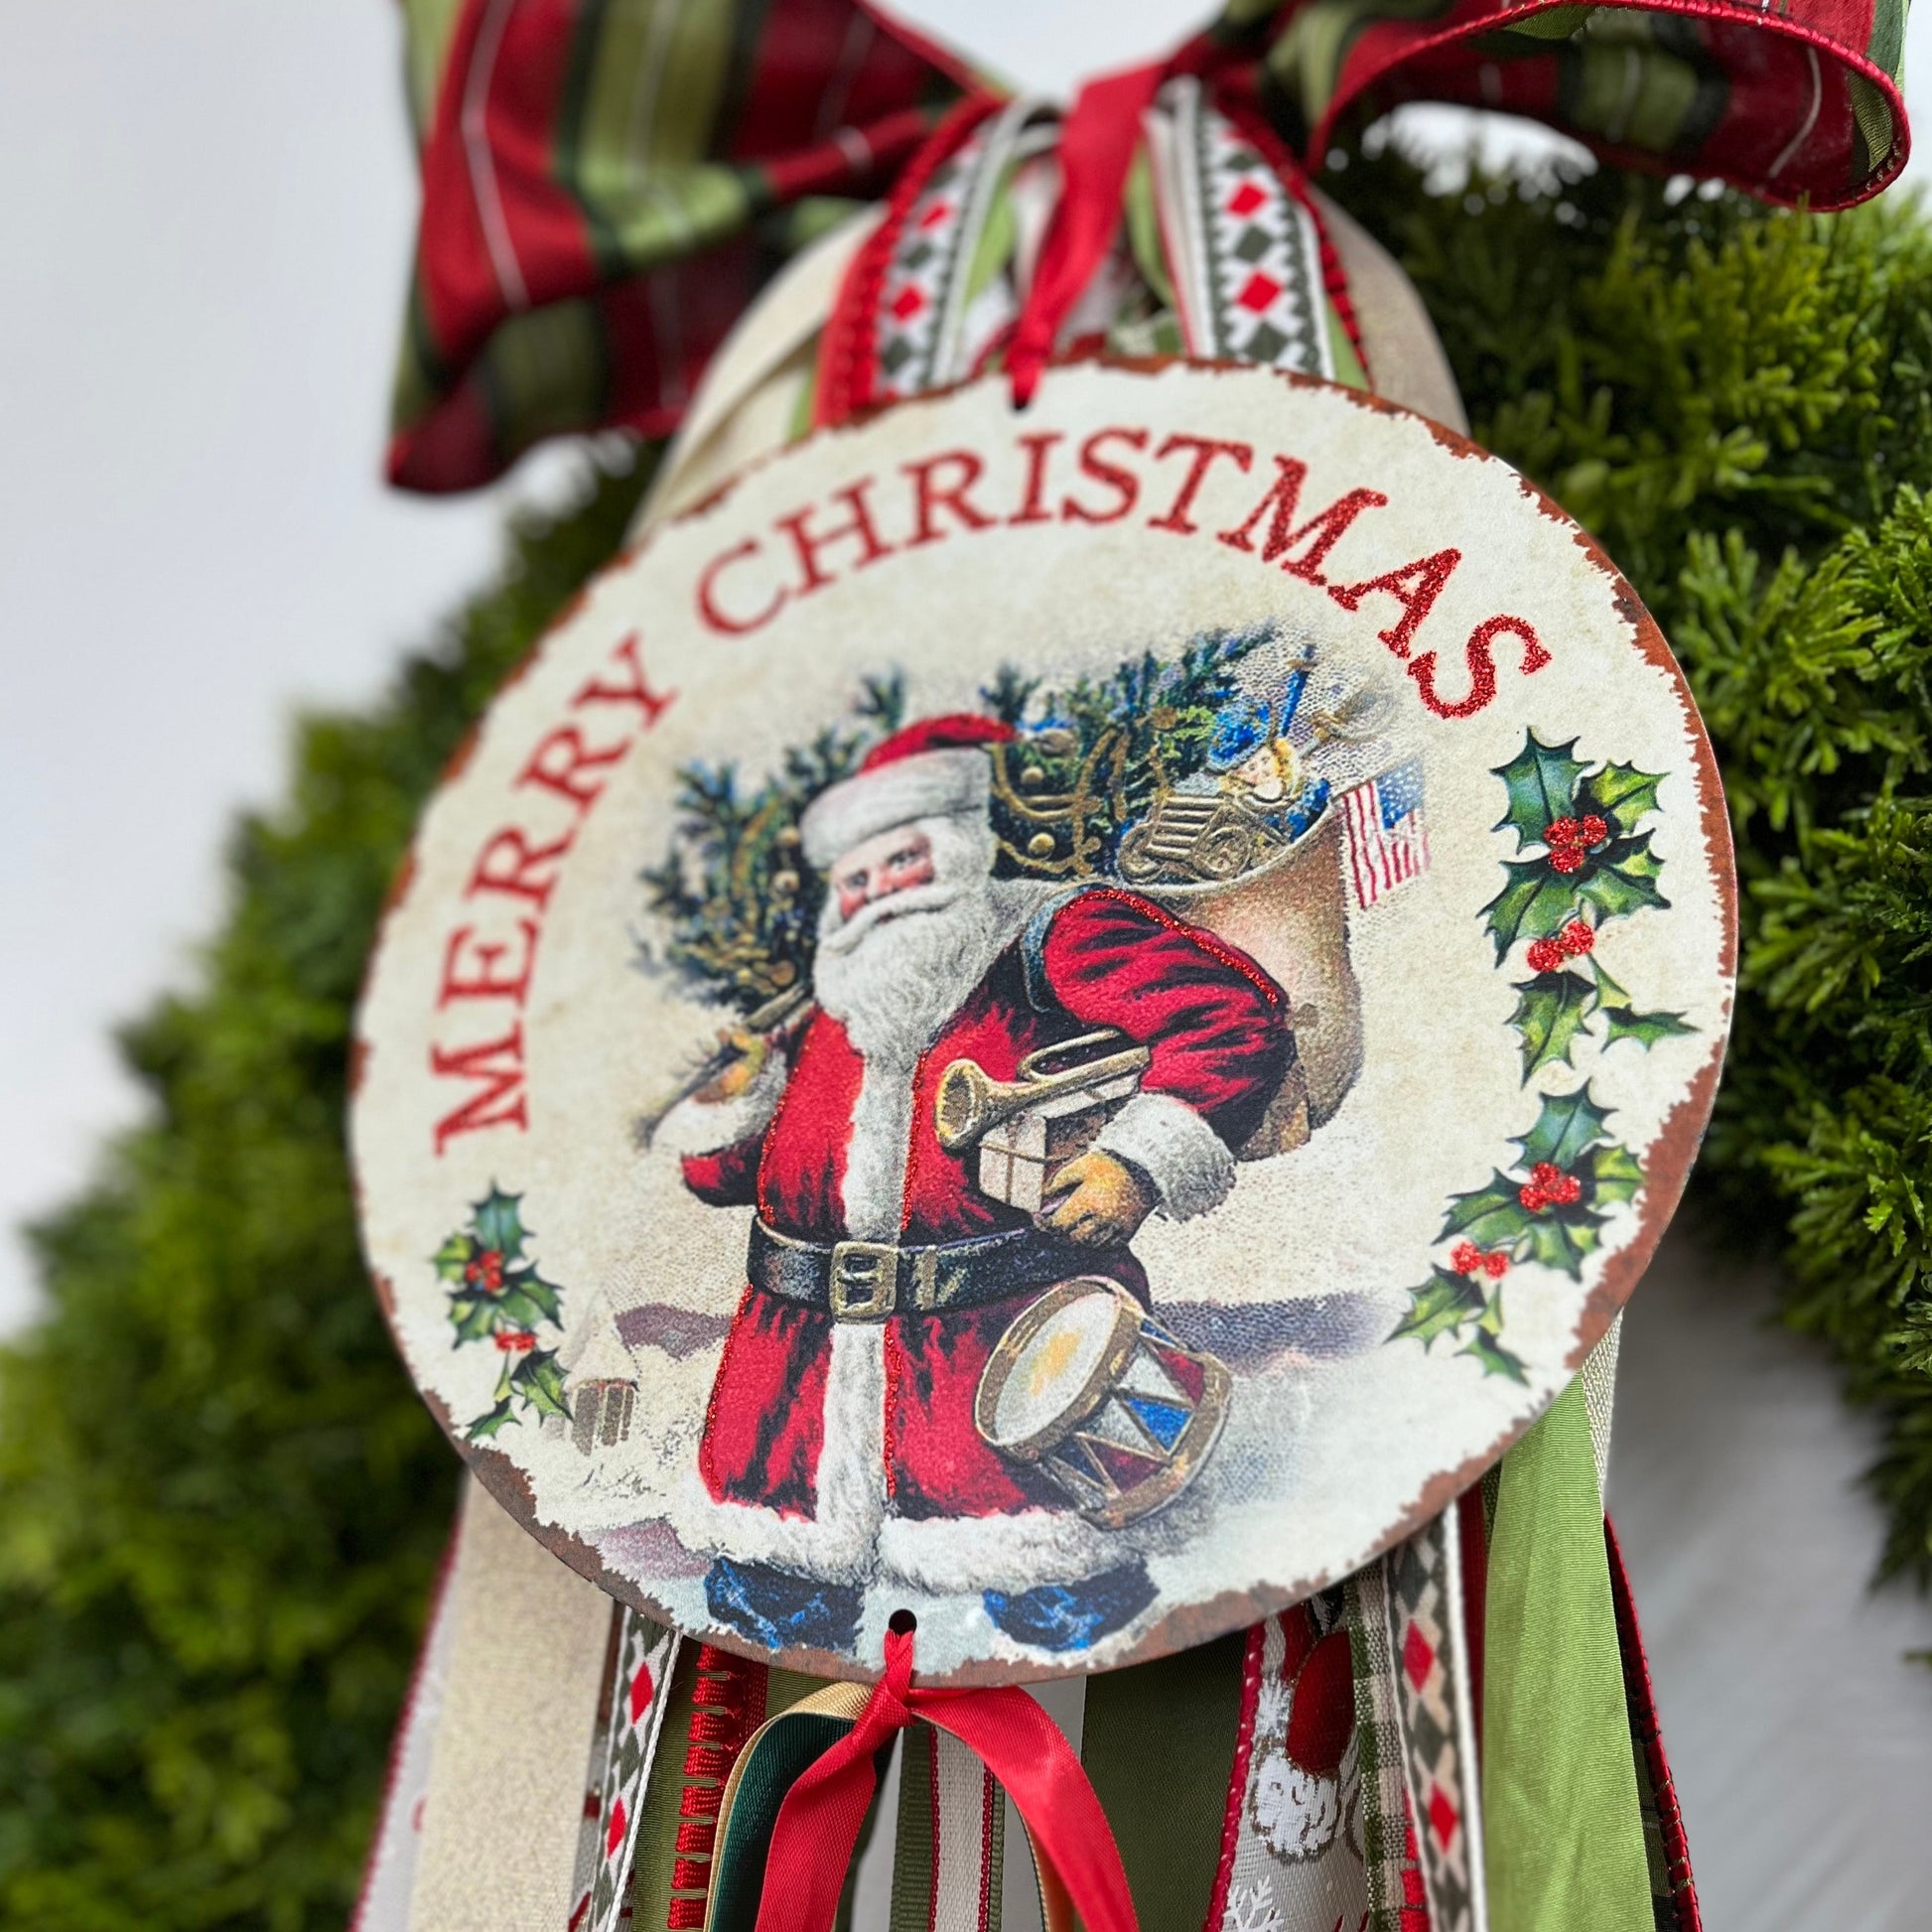 Vintage Christmas Decorations - Timeless Holiday Decor